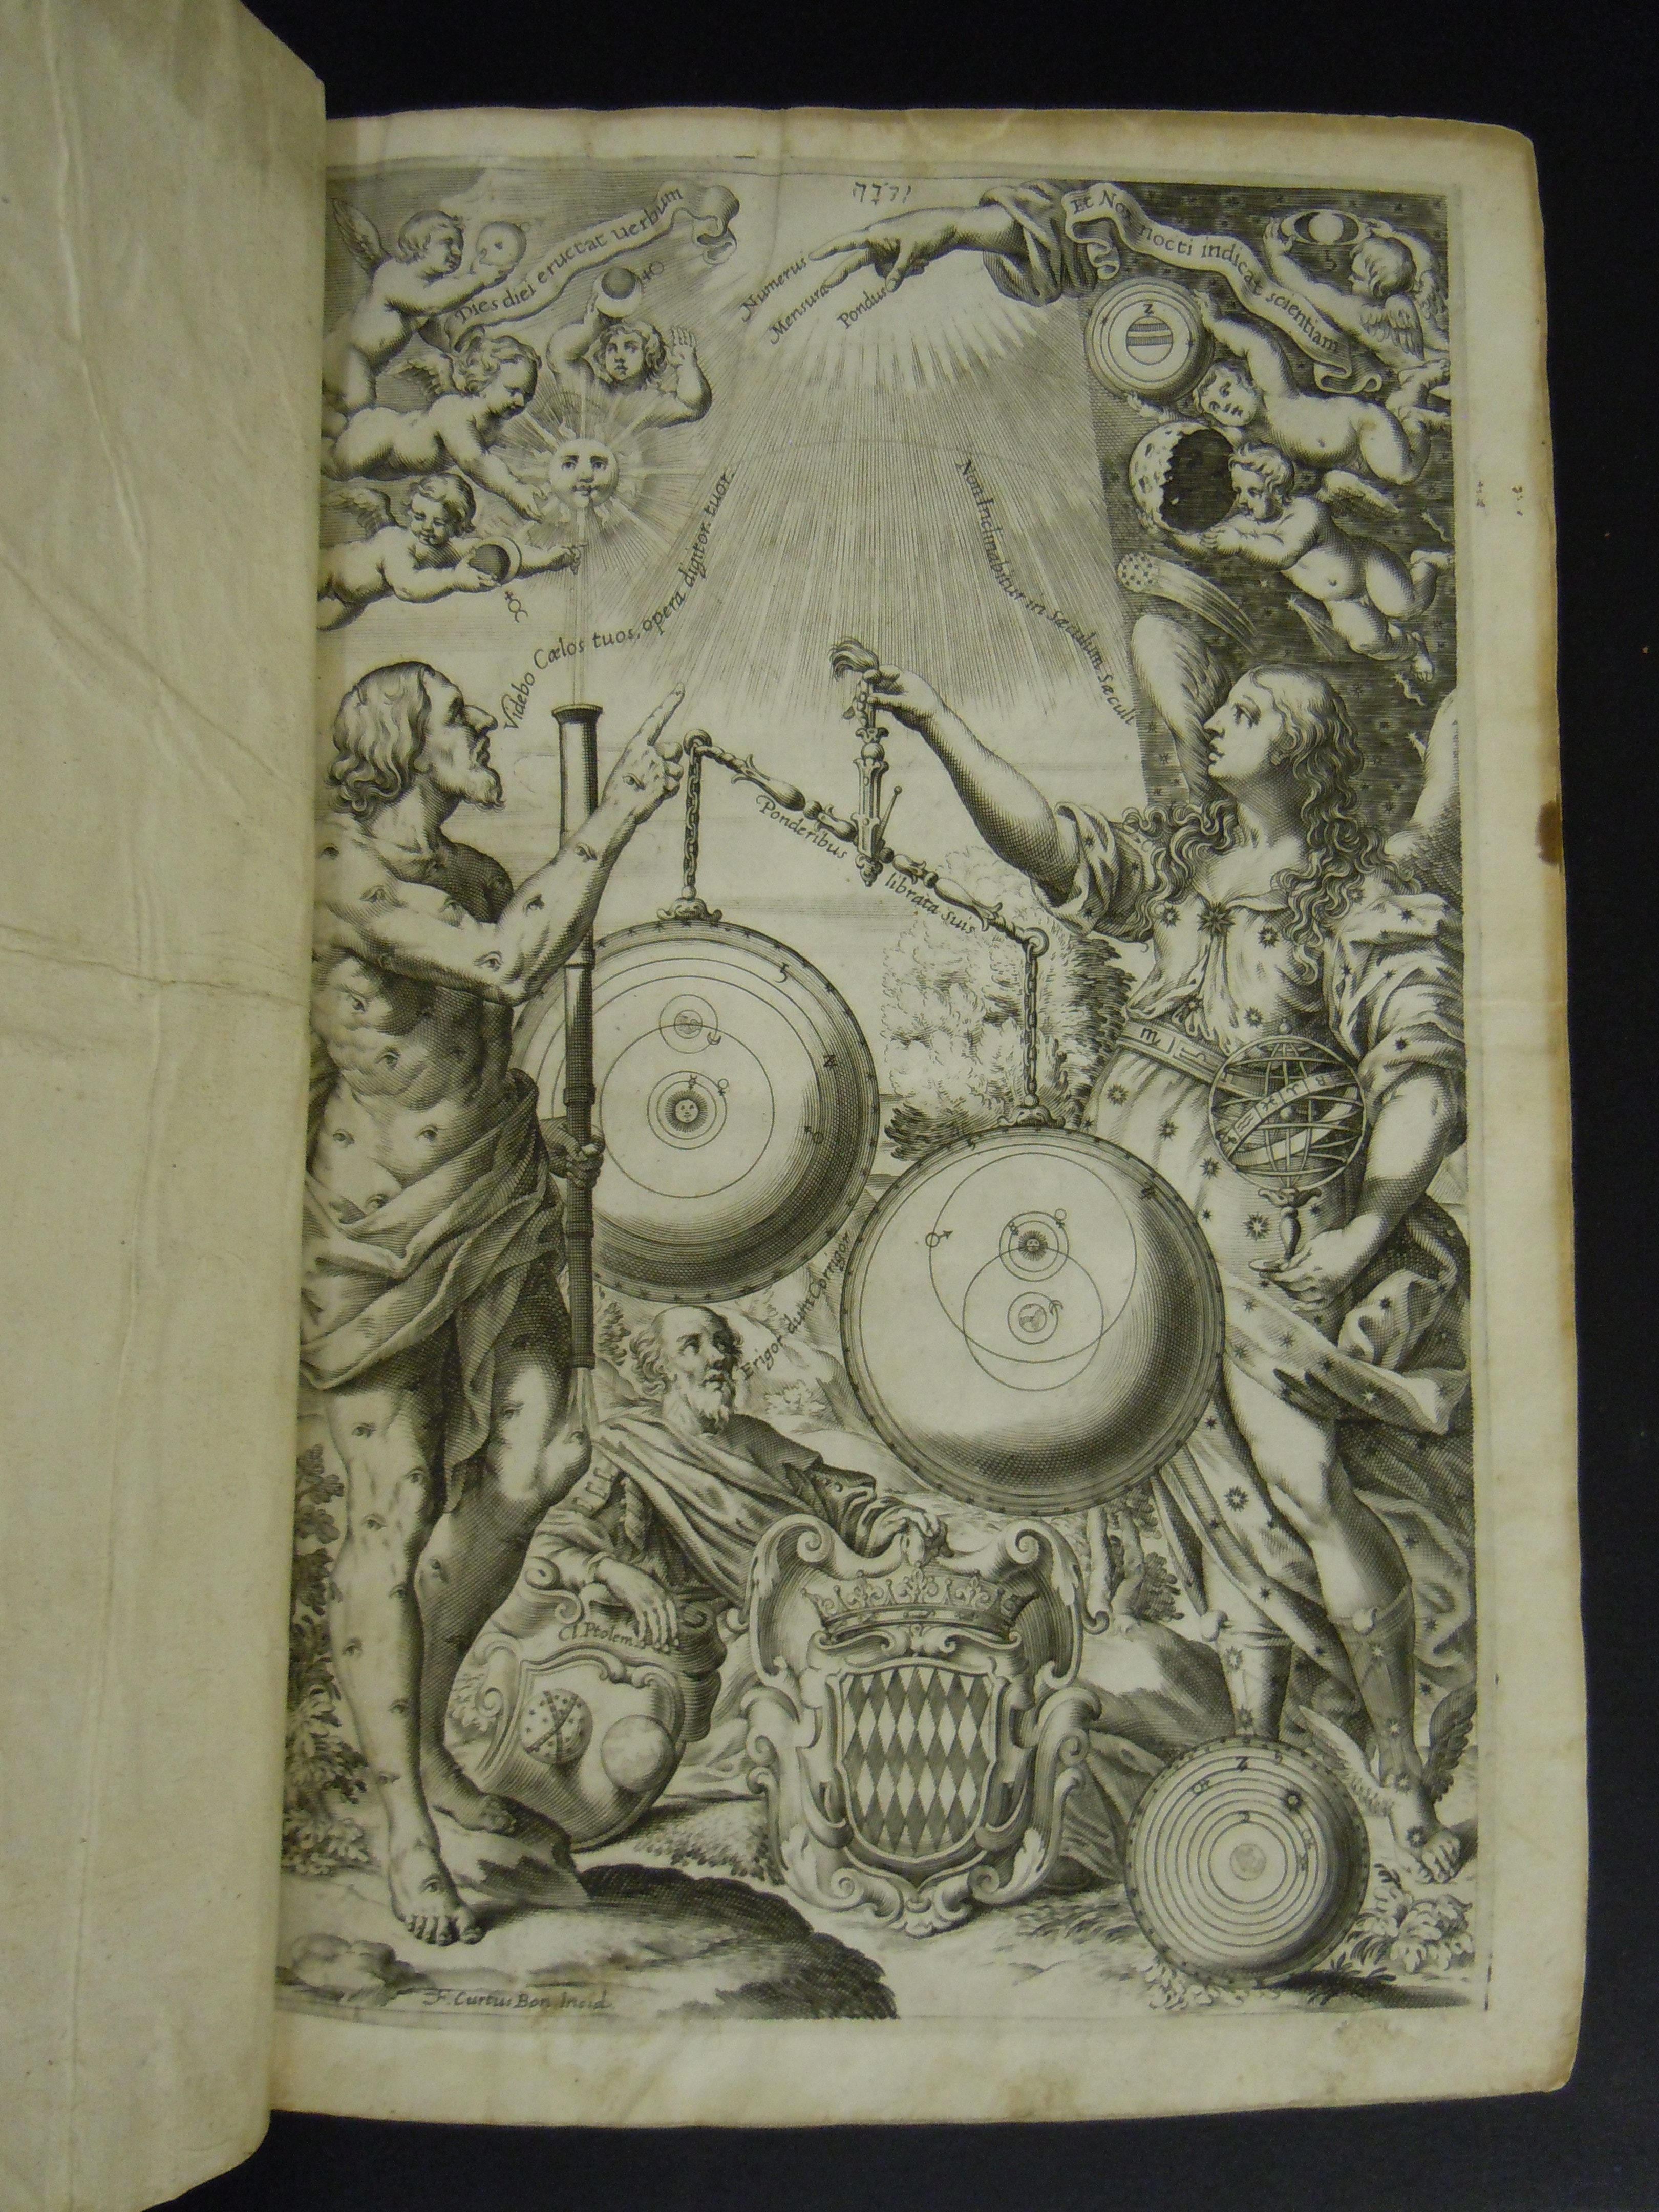 BT3.154.9, 2nd flyleaf, Giovanni Battista Riccioli’s Almagestum nouum (1653)